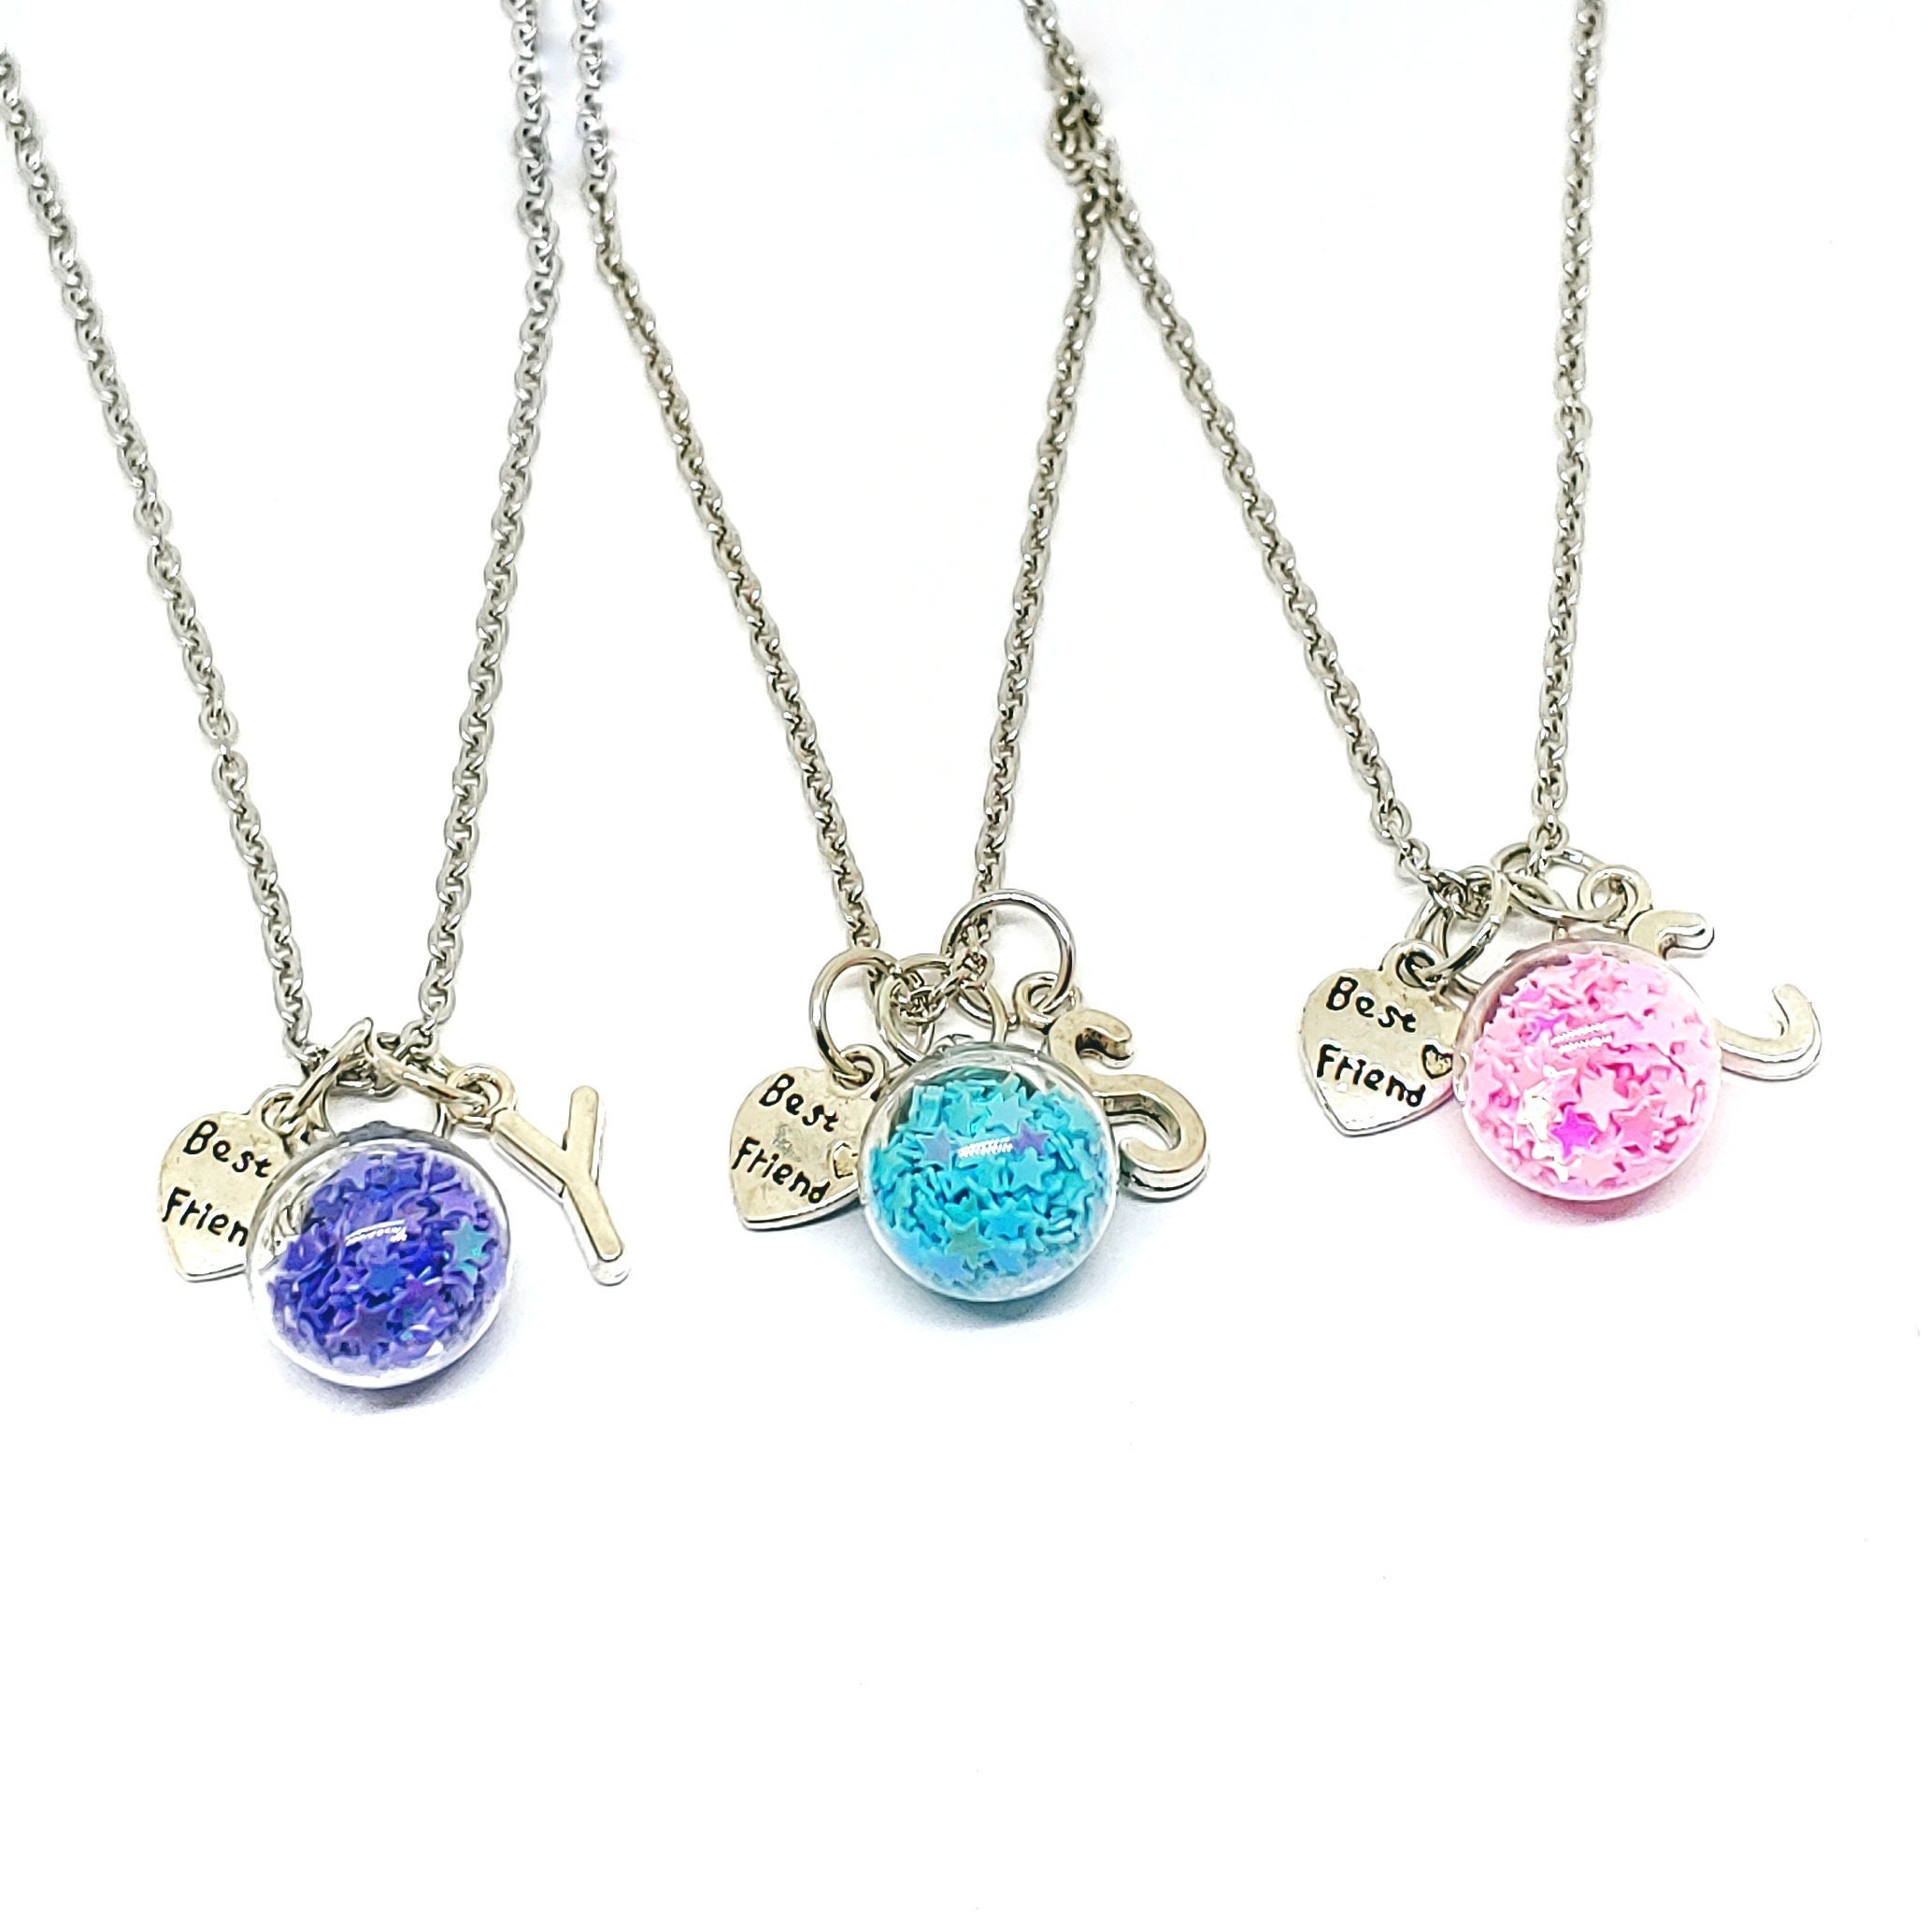 Best Friends Heart Pendant Necklaces - Purple, 2 Pack | Friend necklaces, Best  friend necklaces, Best friend jewelry